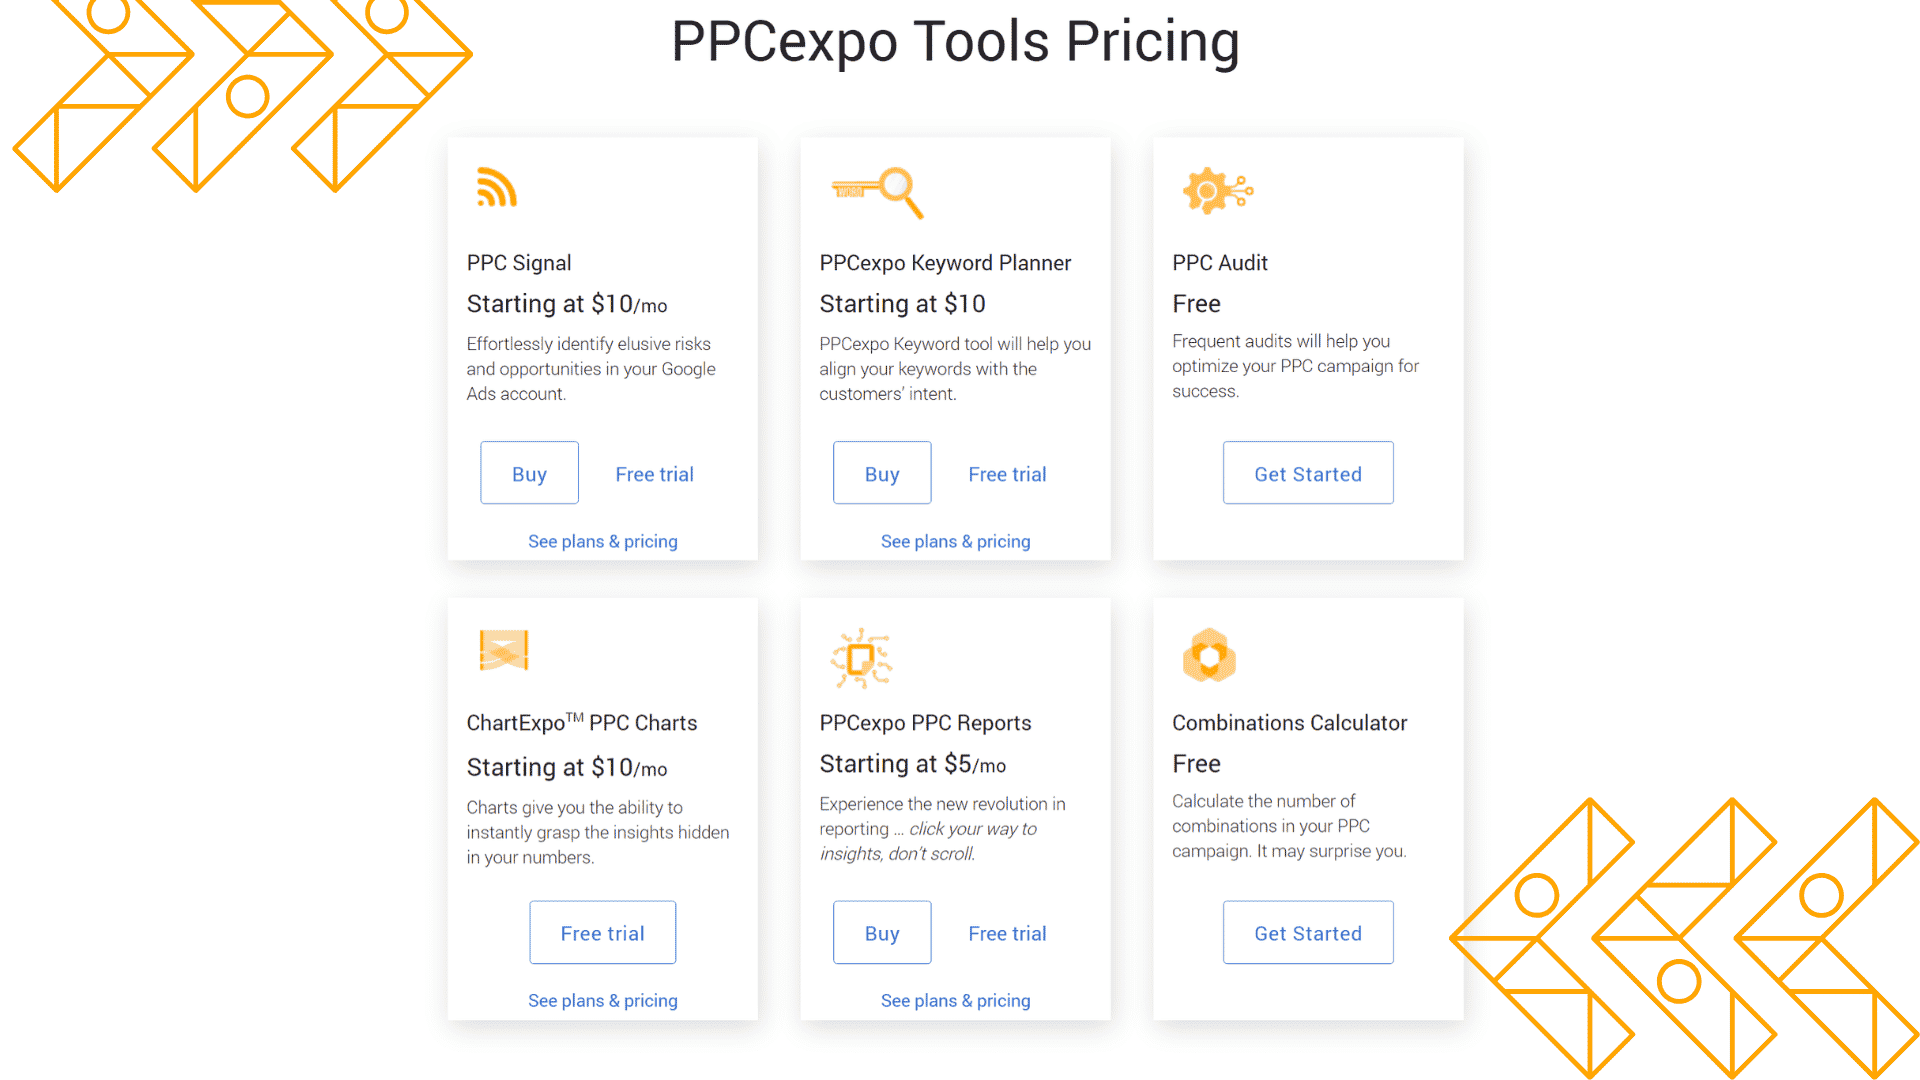 PPCexpo Pricing